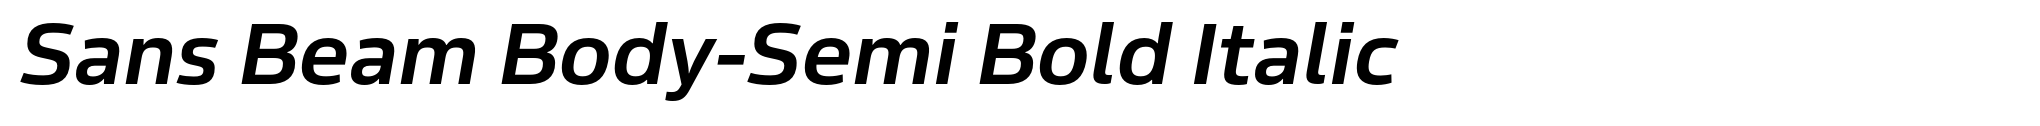 Sans Beam Body-Semi Bold Italic image